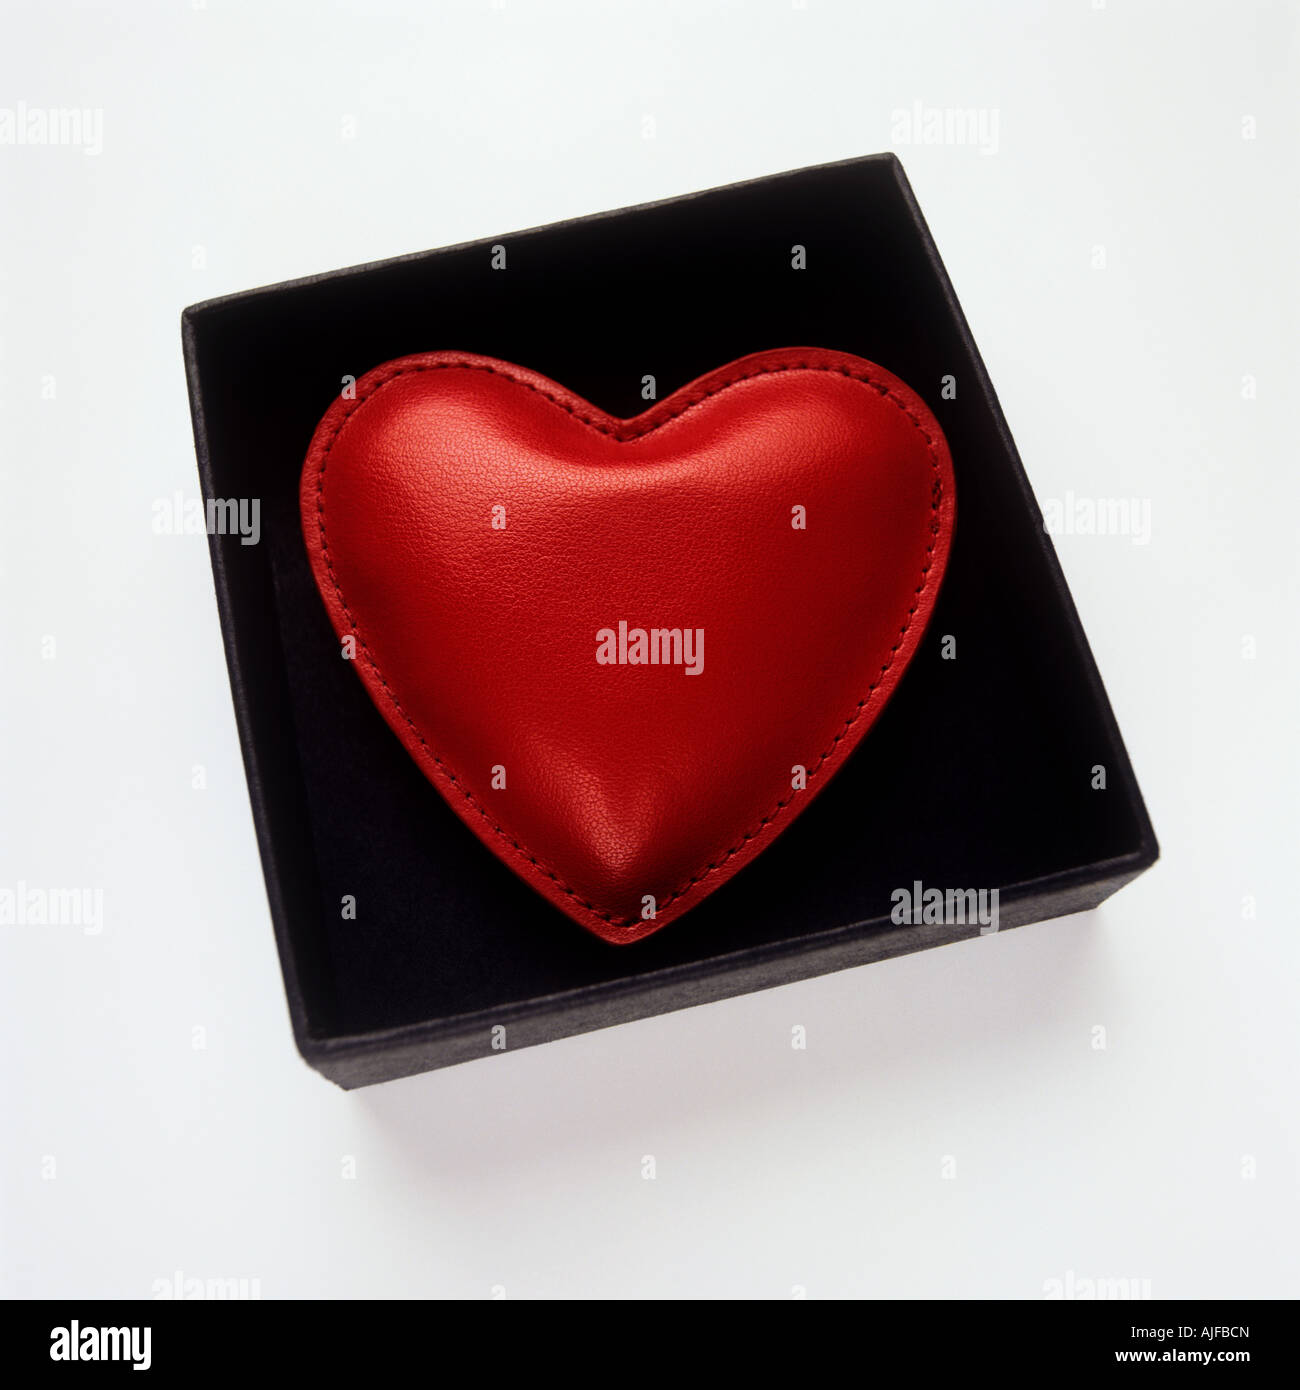 A heart shaped trinket Stock Photo